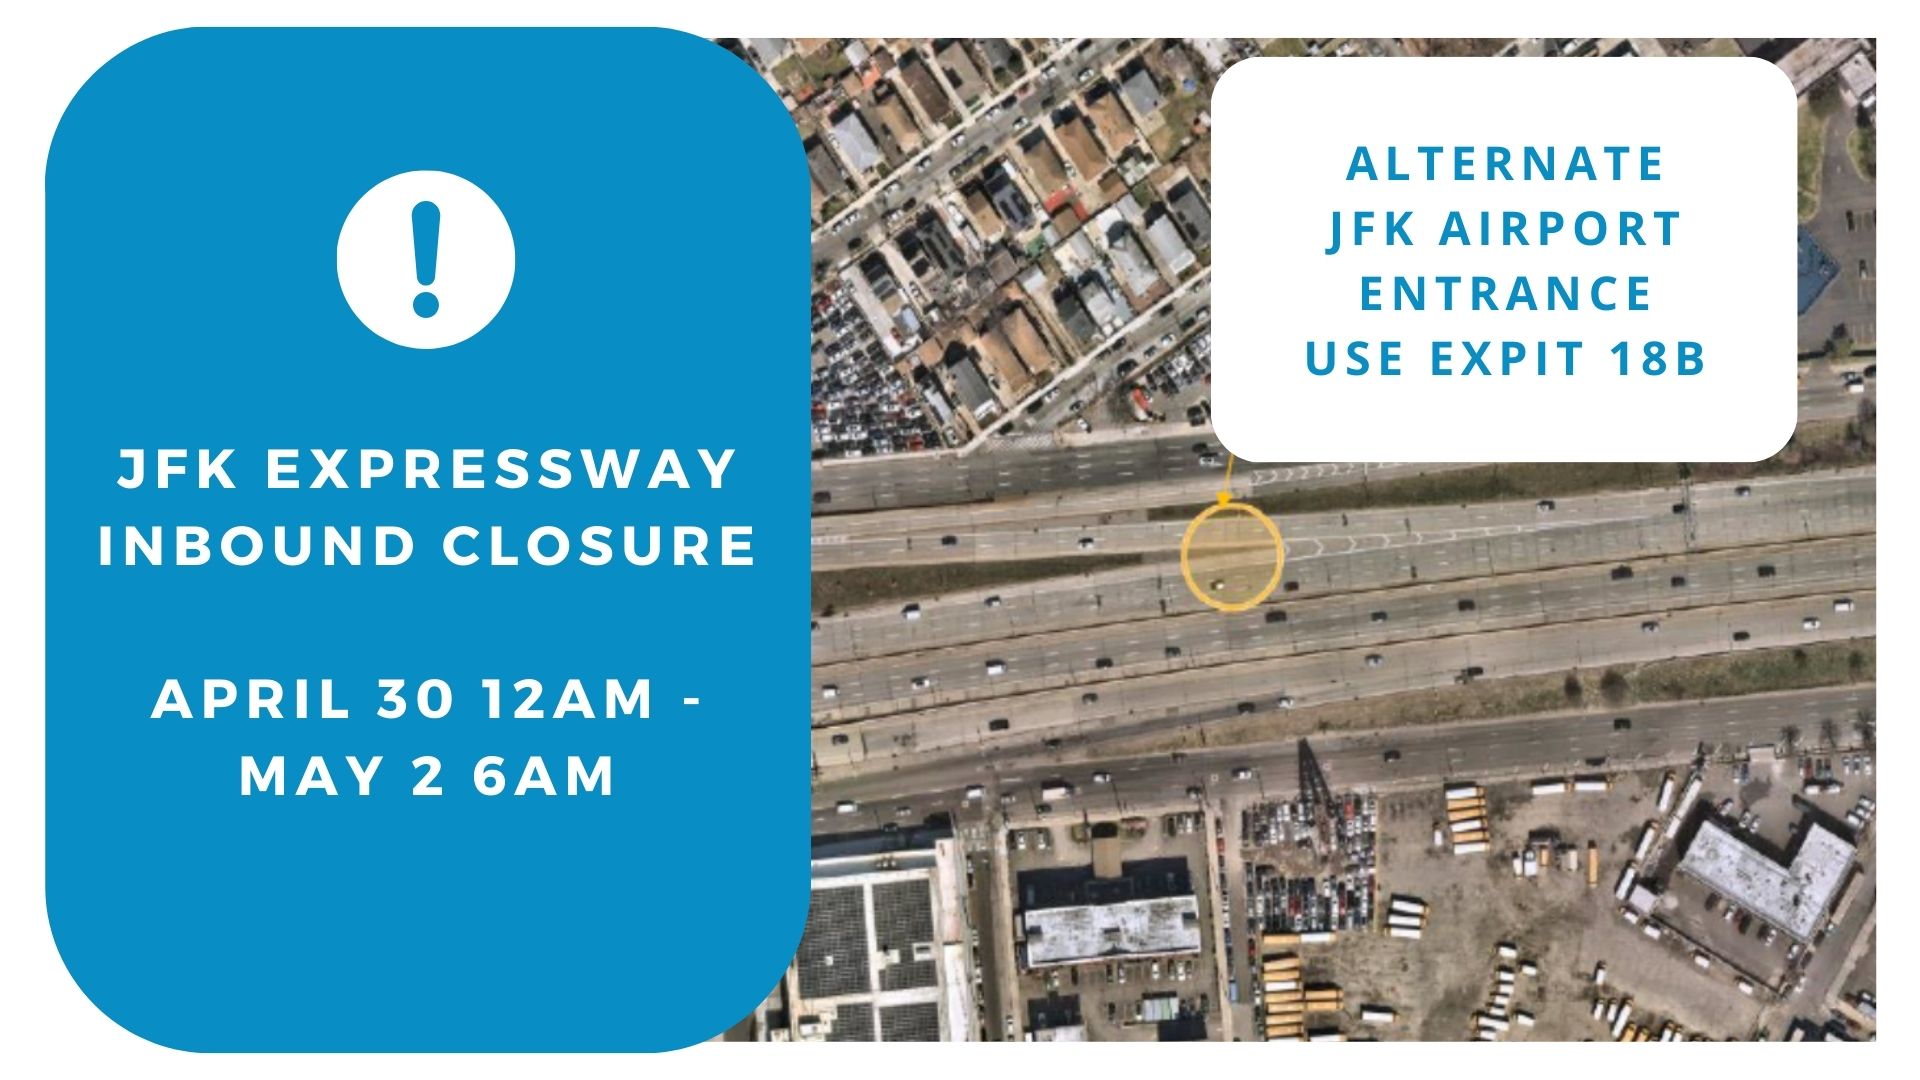 JFK Expressway Inbound Closure April 30 12am - May 2 6am